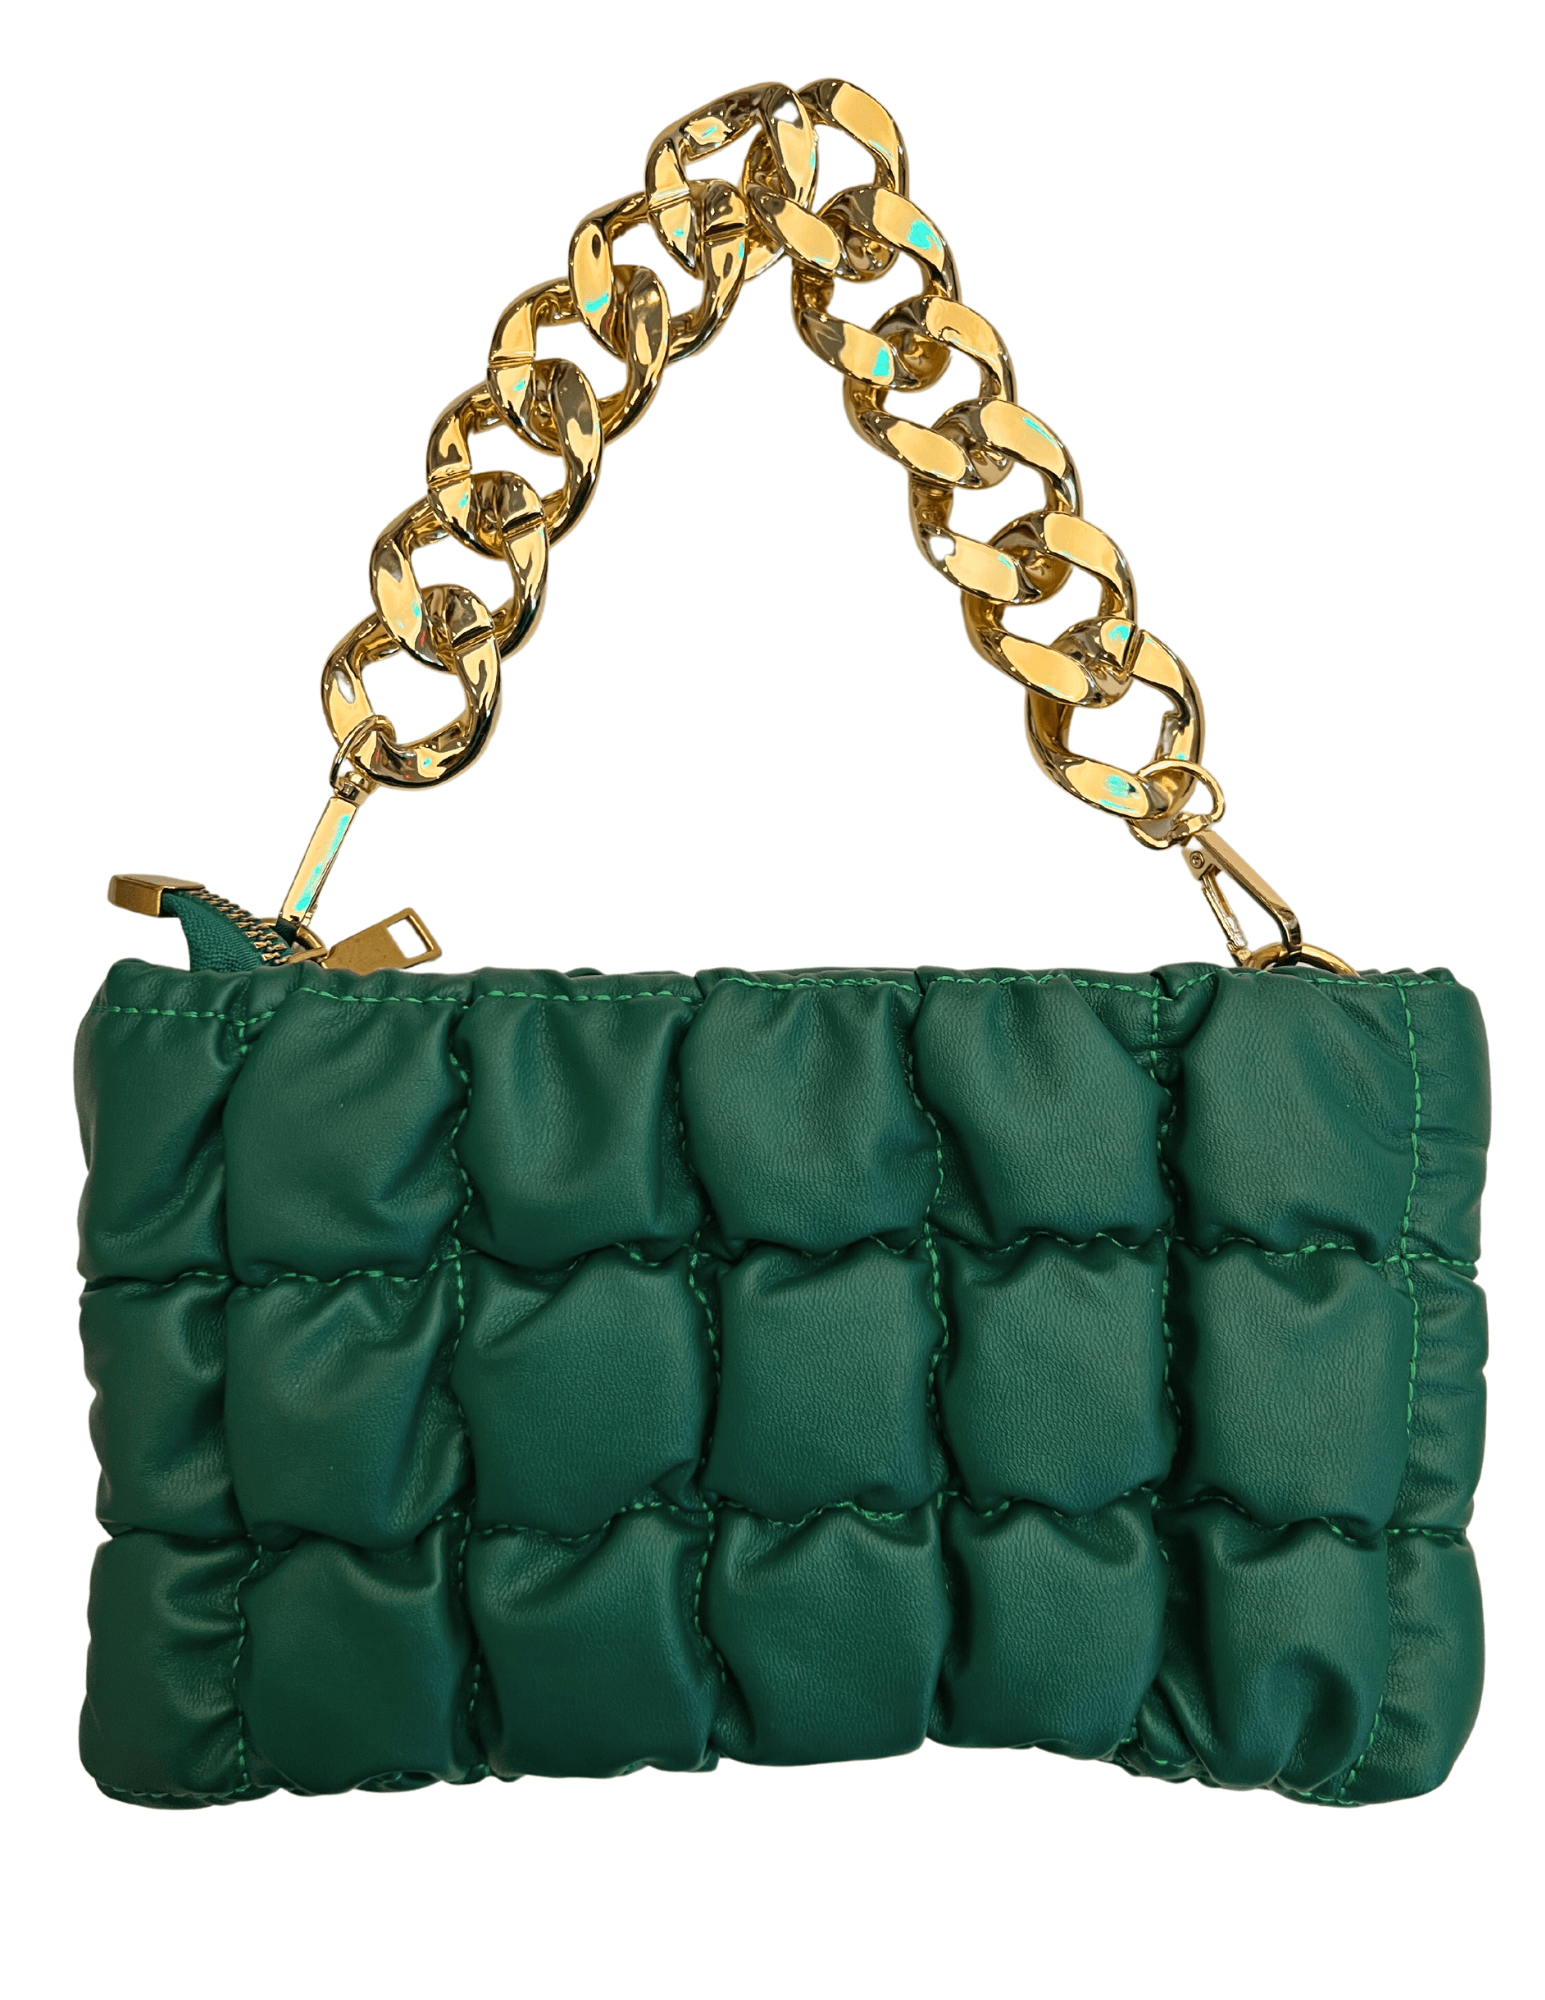 Green Leather Cross-Body Bag for Women - Suzon M Pastel Mint | PAUL MARIUS